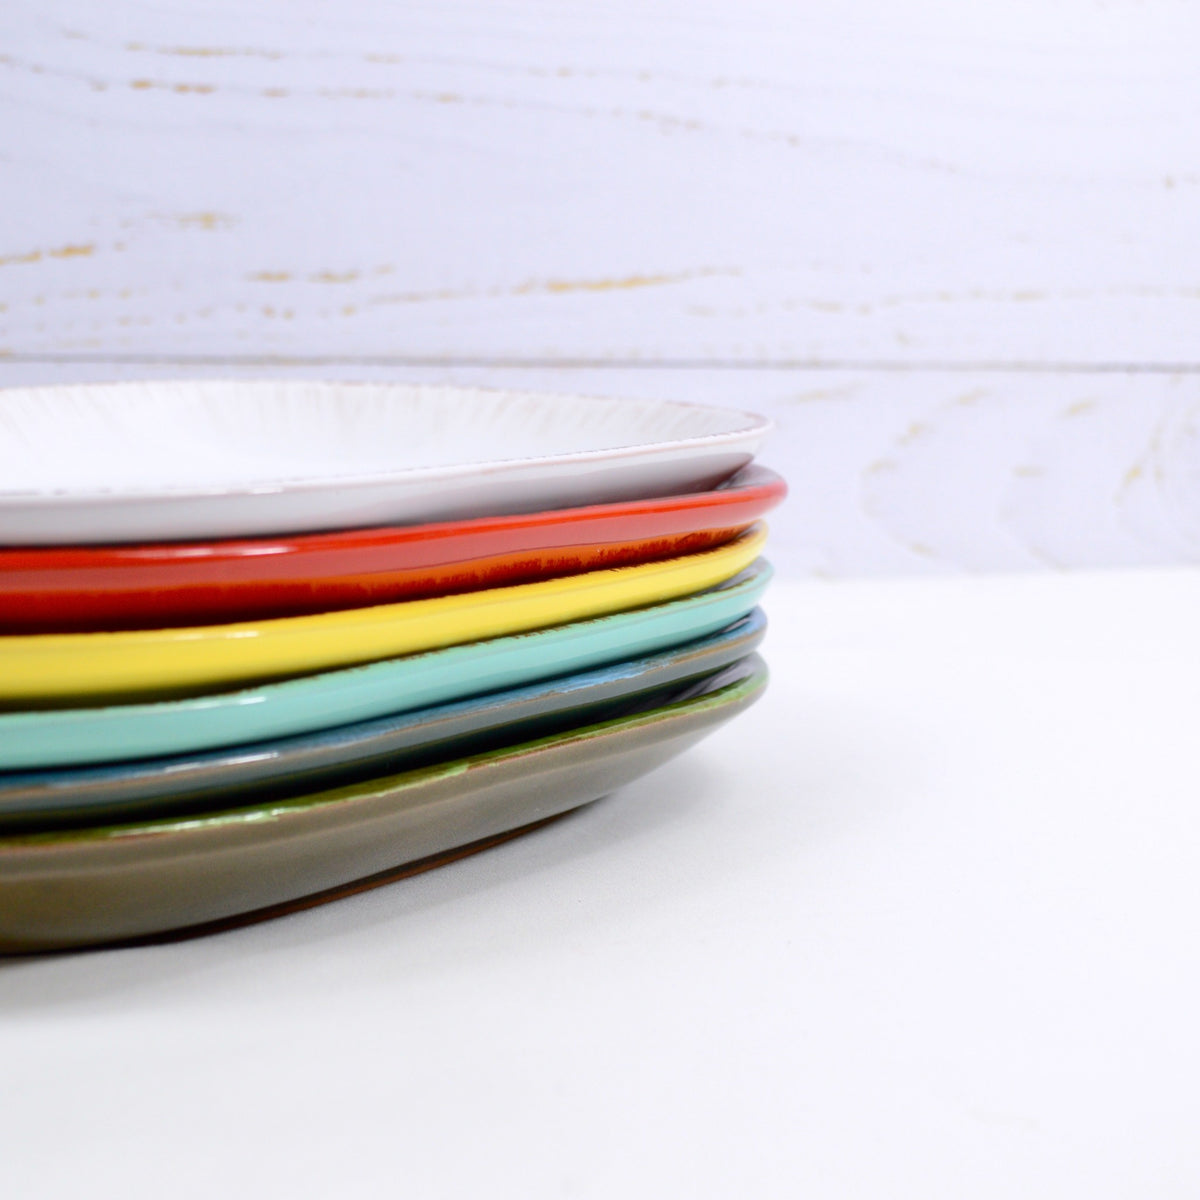 Tuscan Ceramic Oval Plates, Set of 2, Made in Italy - My Italian Decor